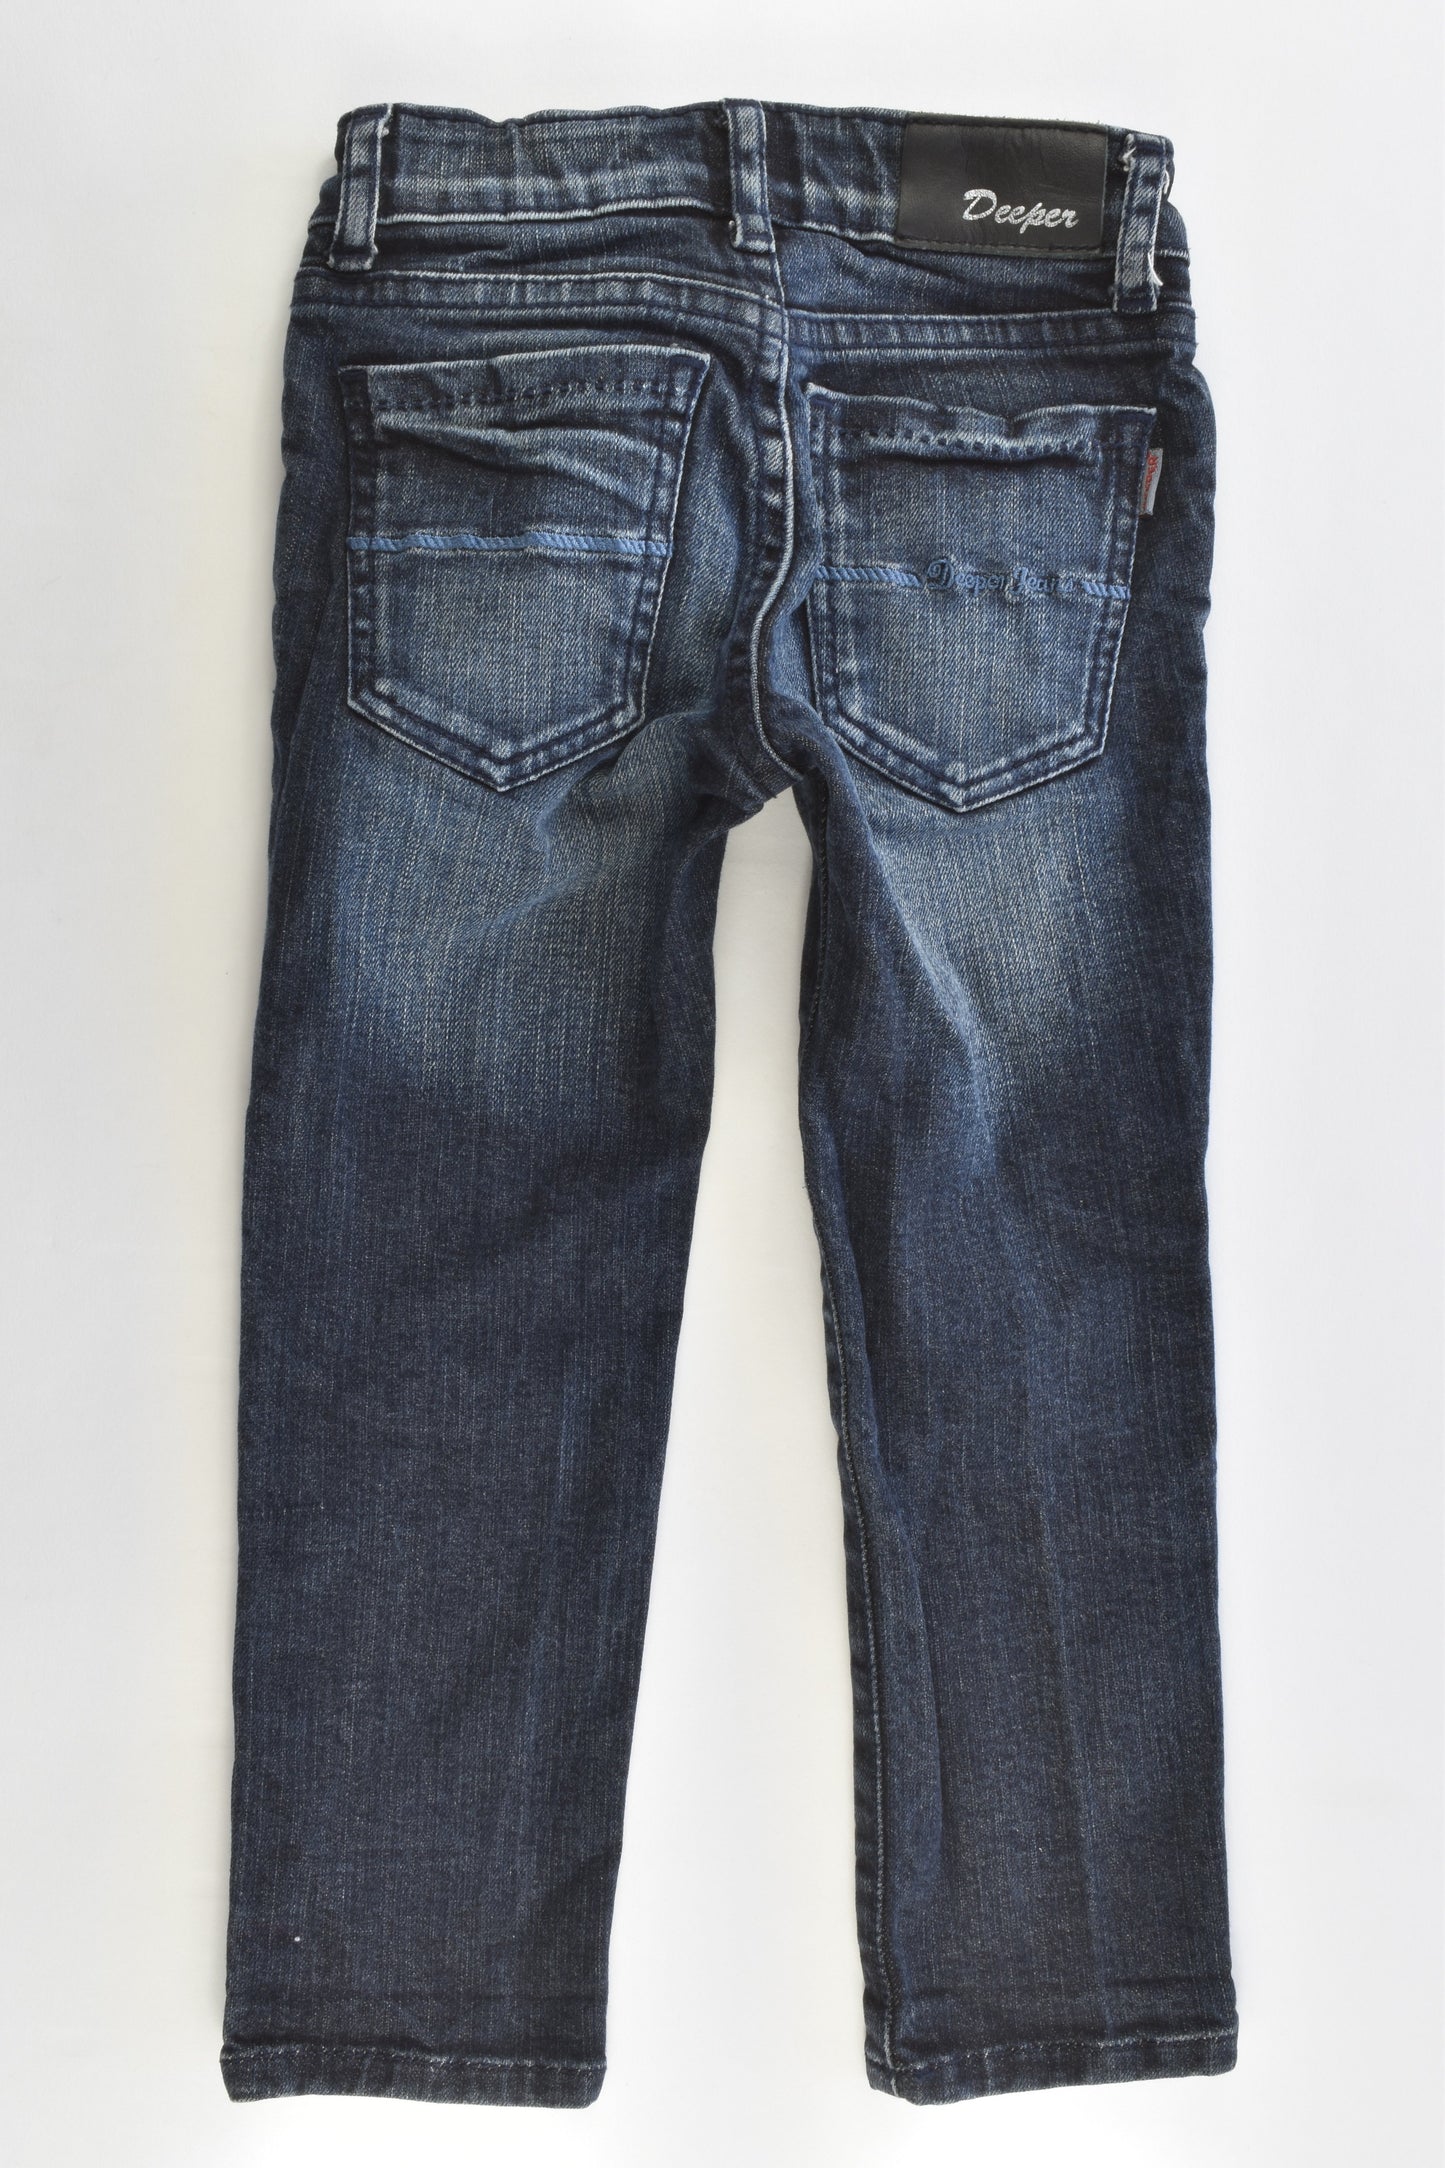 Deeper Jeans Size 3 Stretchy Denim Pants